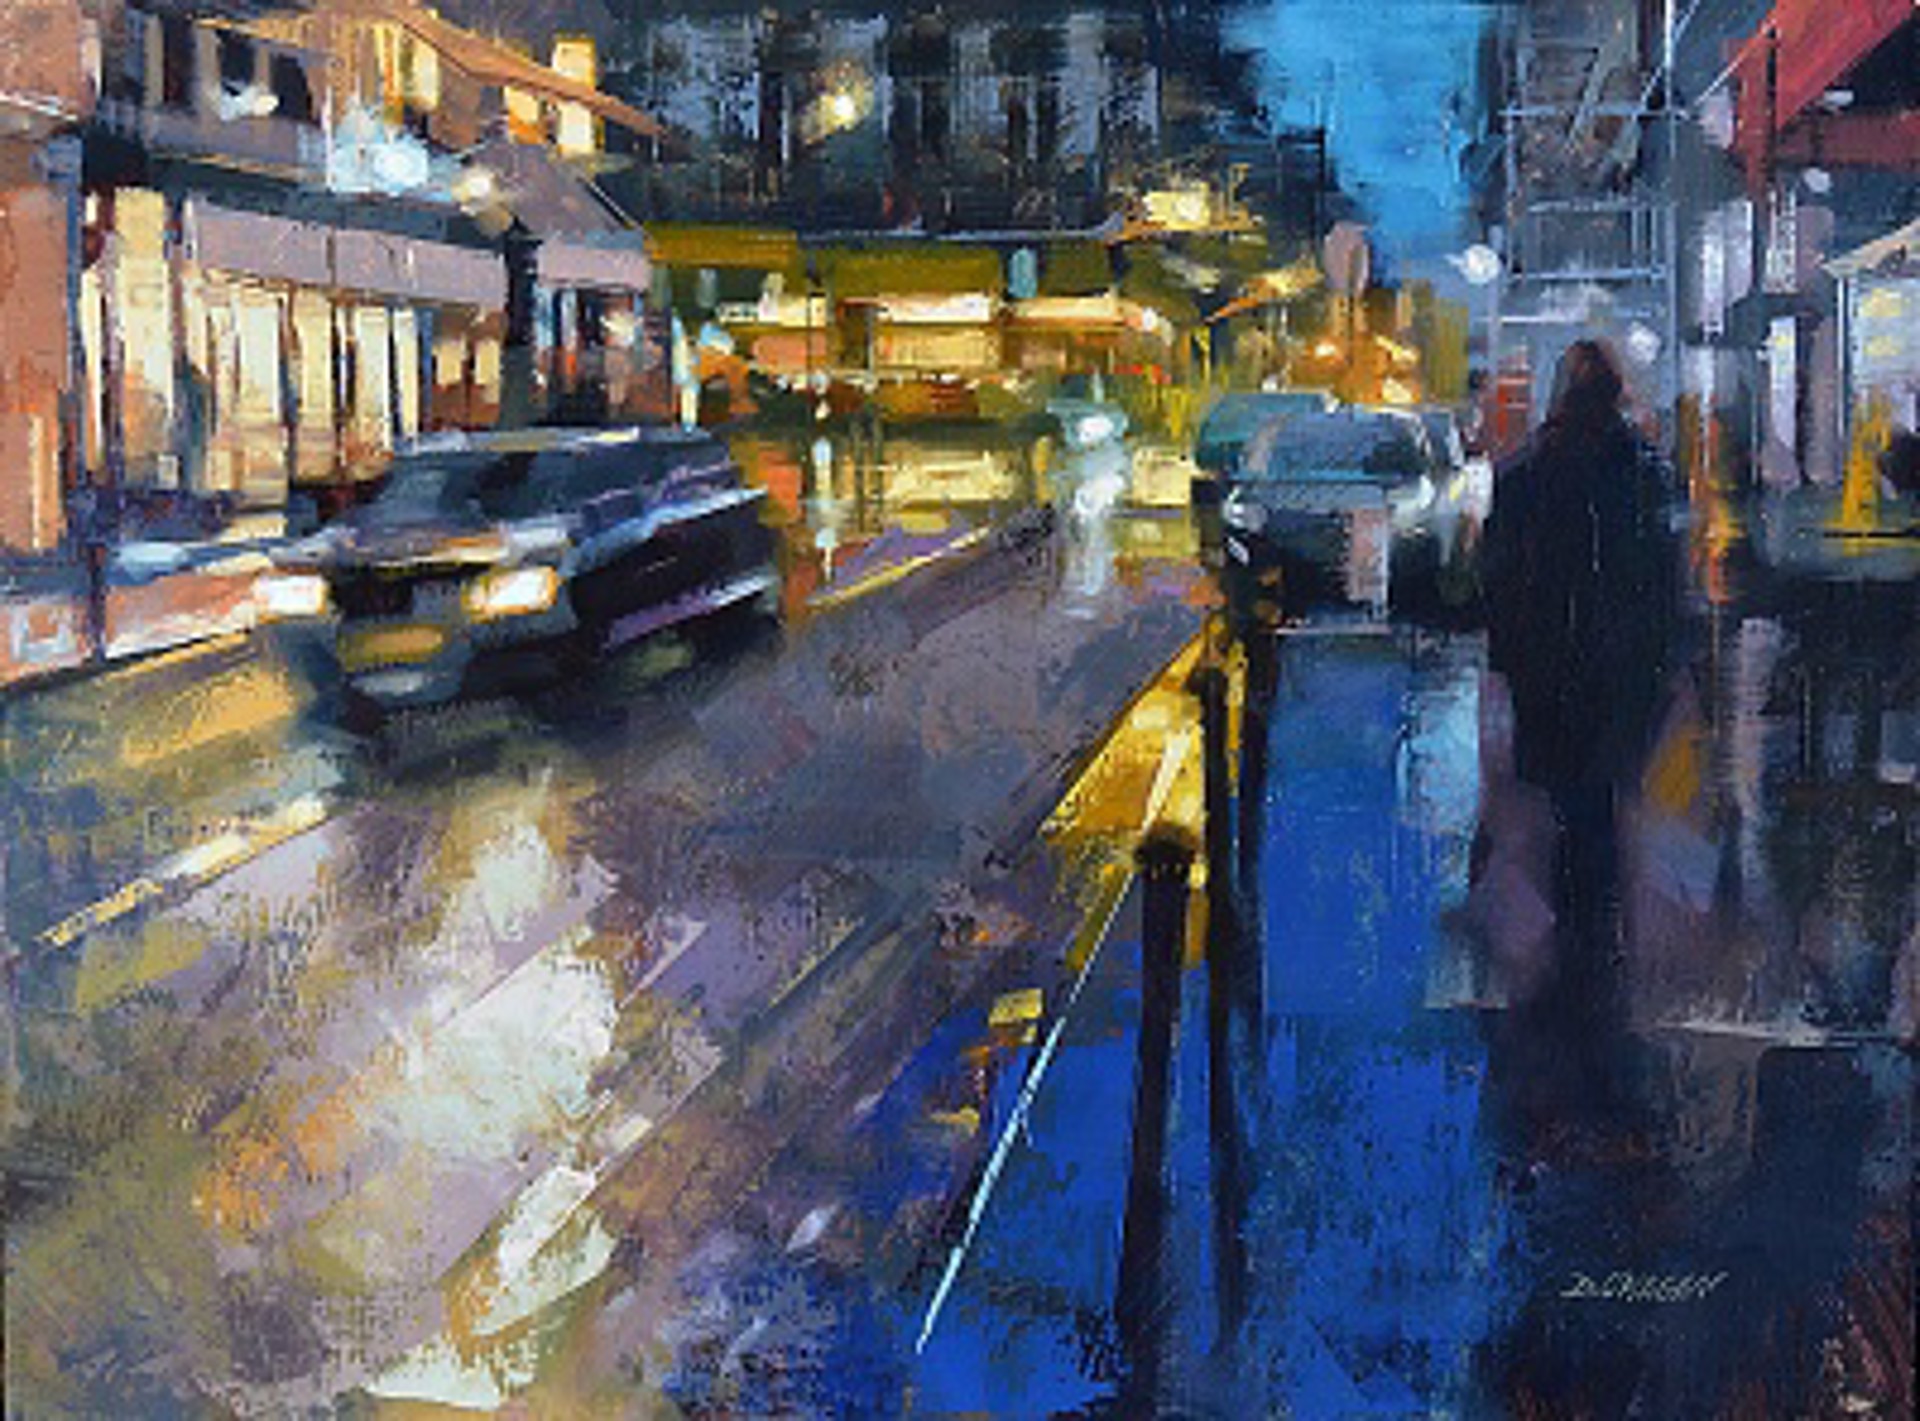 9th Arrondissement at Night by Desmond O'HAGAN